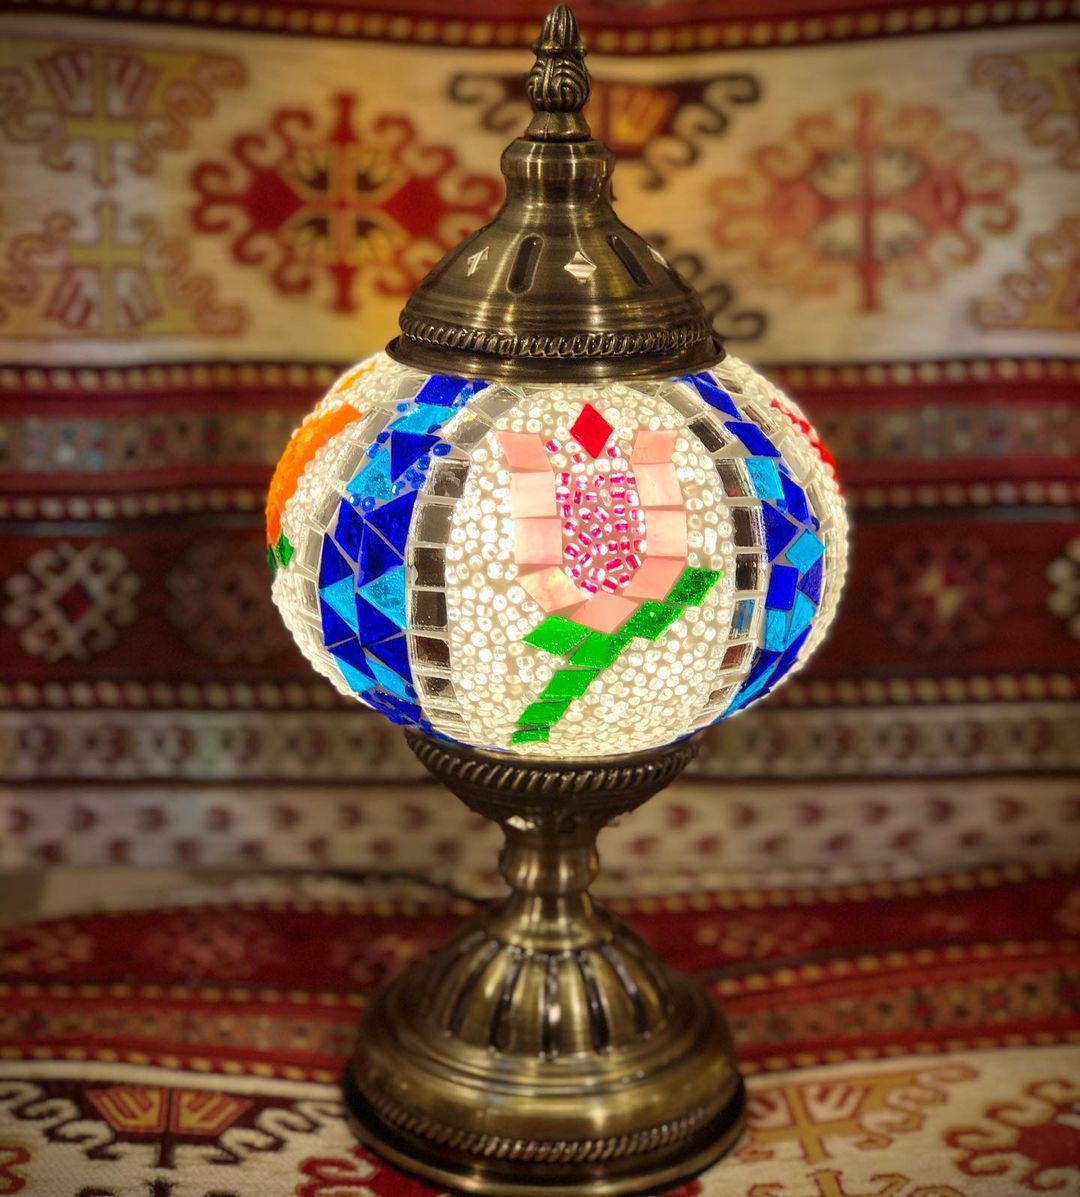 Turkish mosaic lamp with pink tulip pattern on it